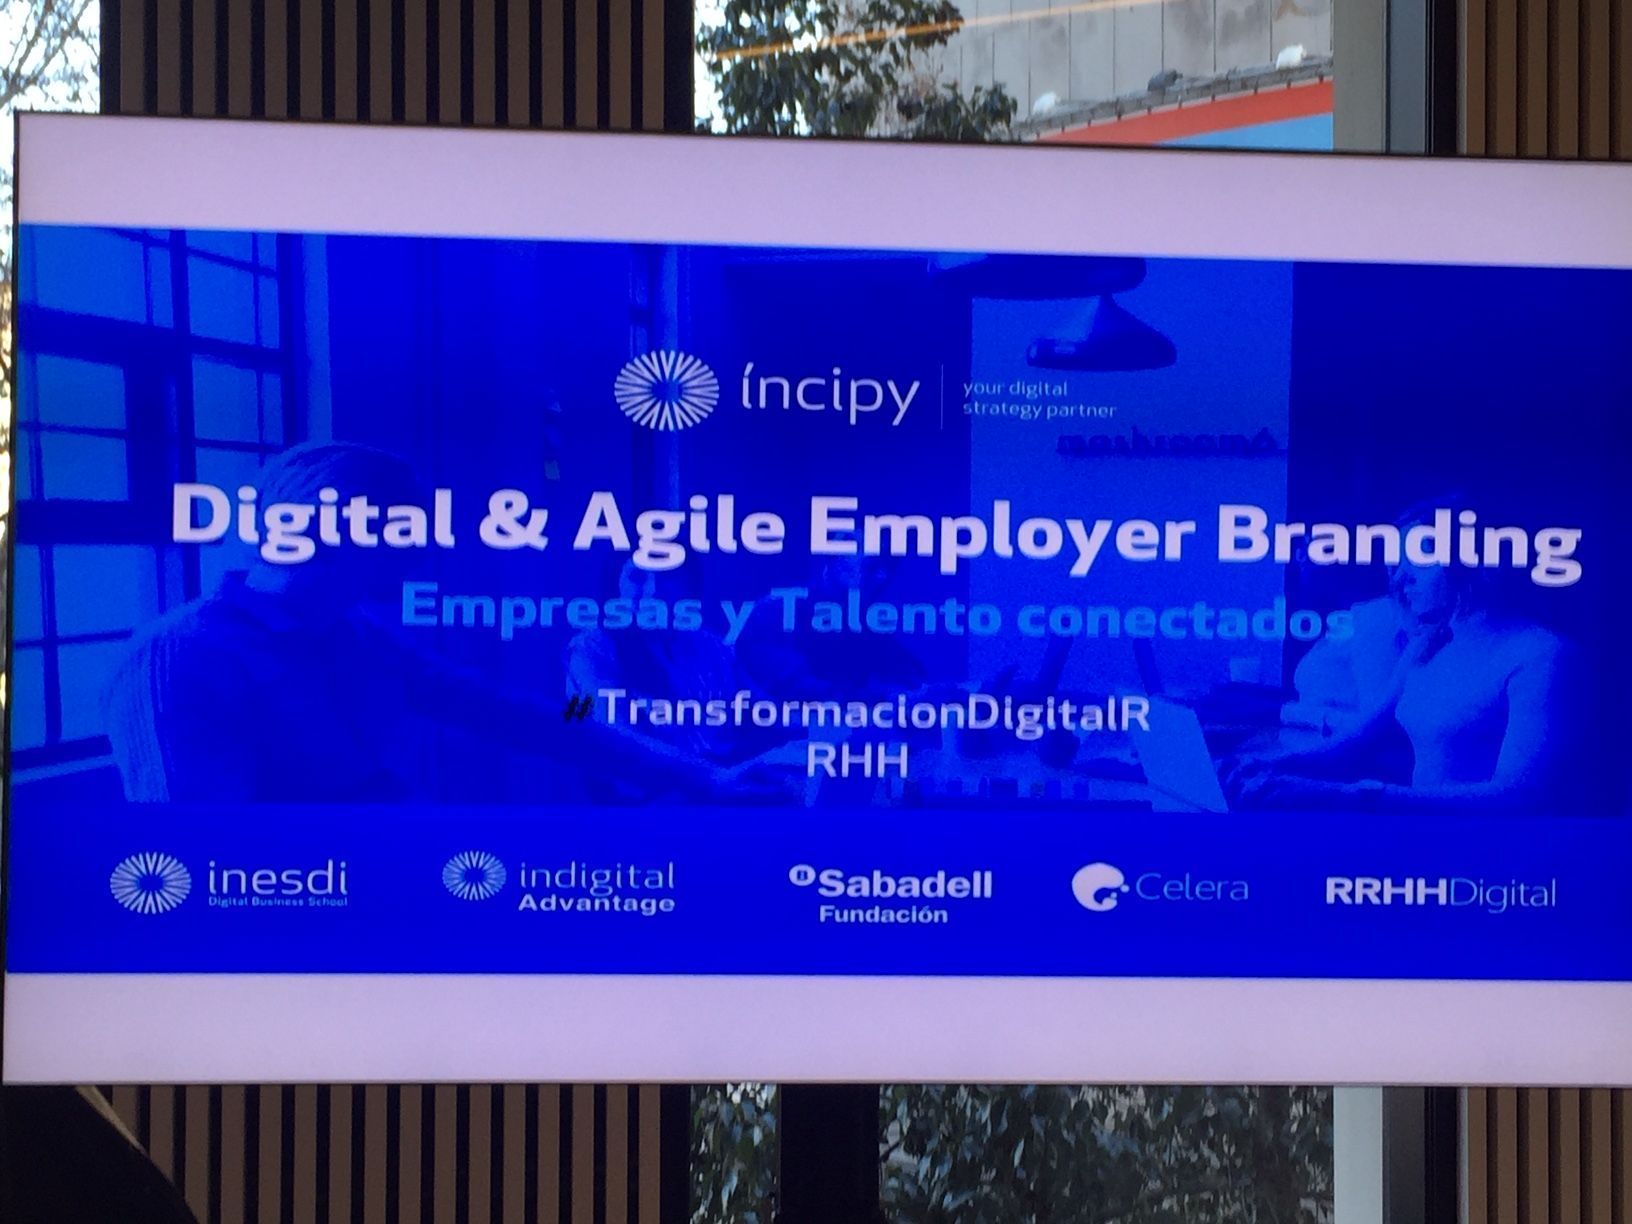 Bisaid Ha Assistit A L’event “Digital & Agile Employer Branding” Organizat Per Íncipy